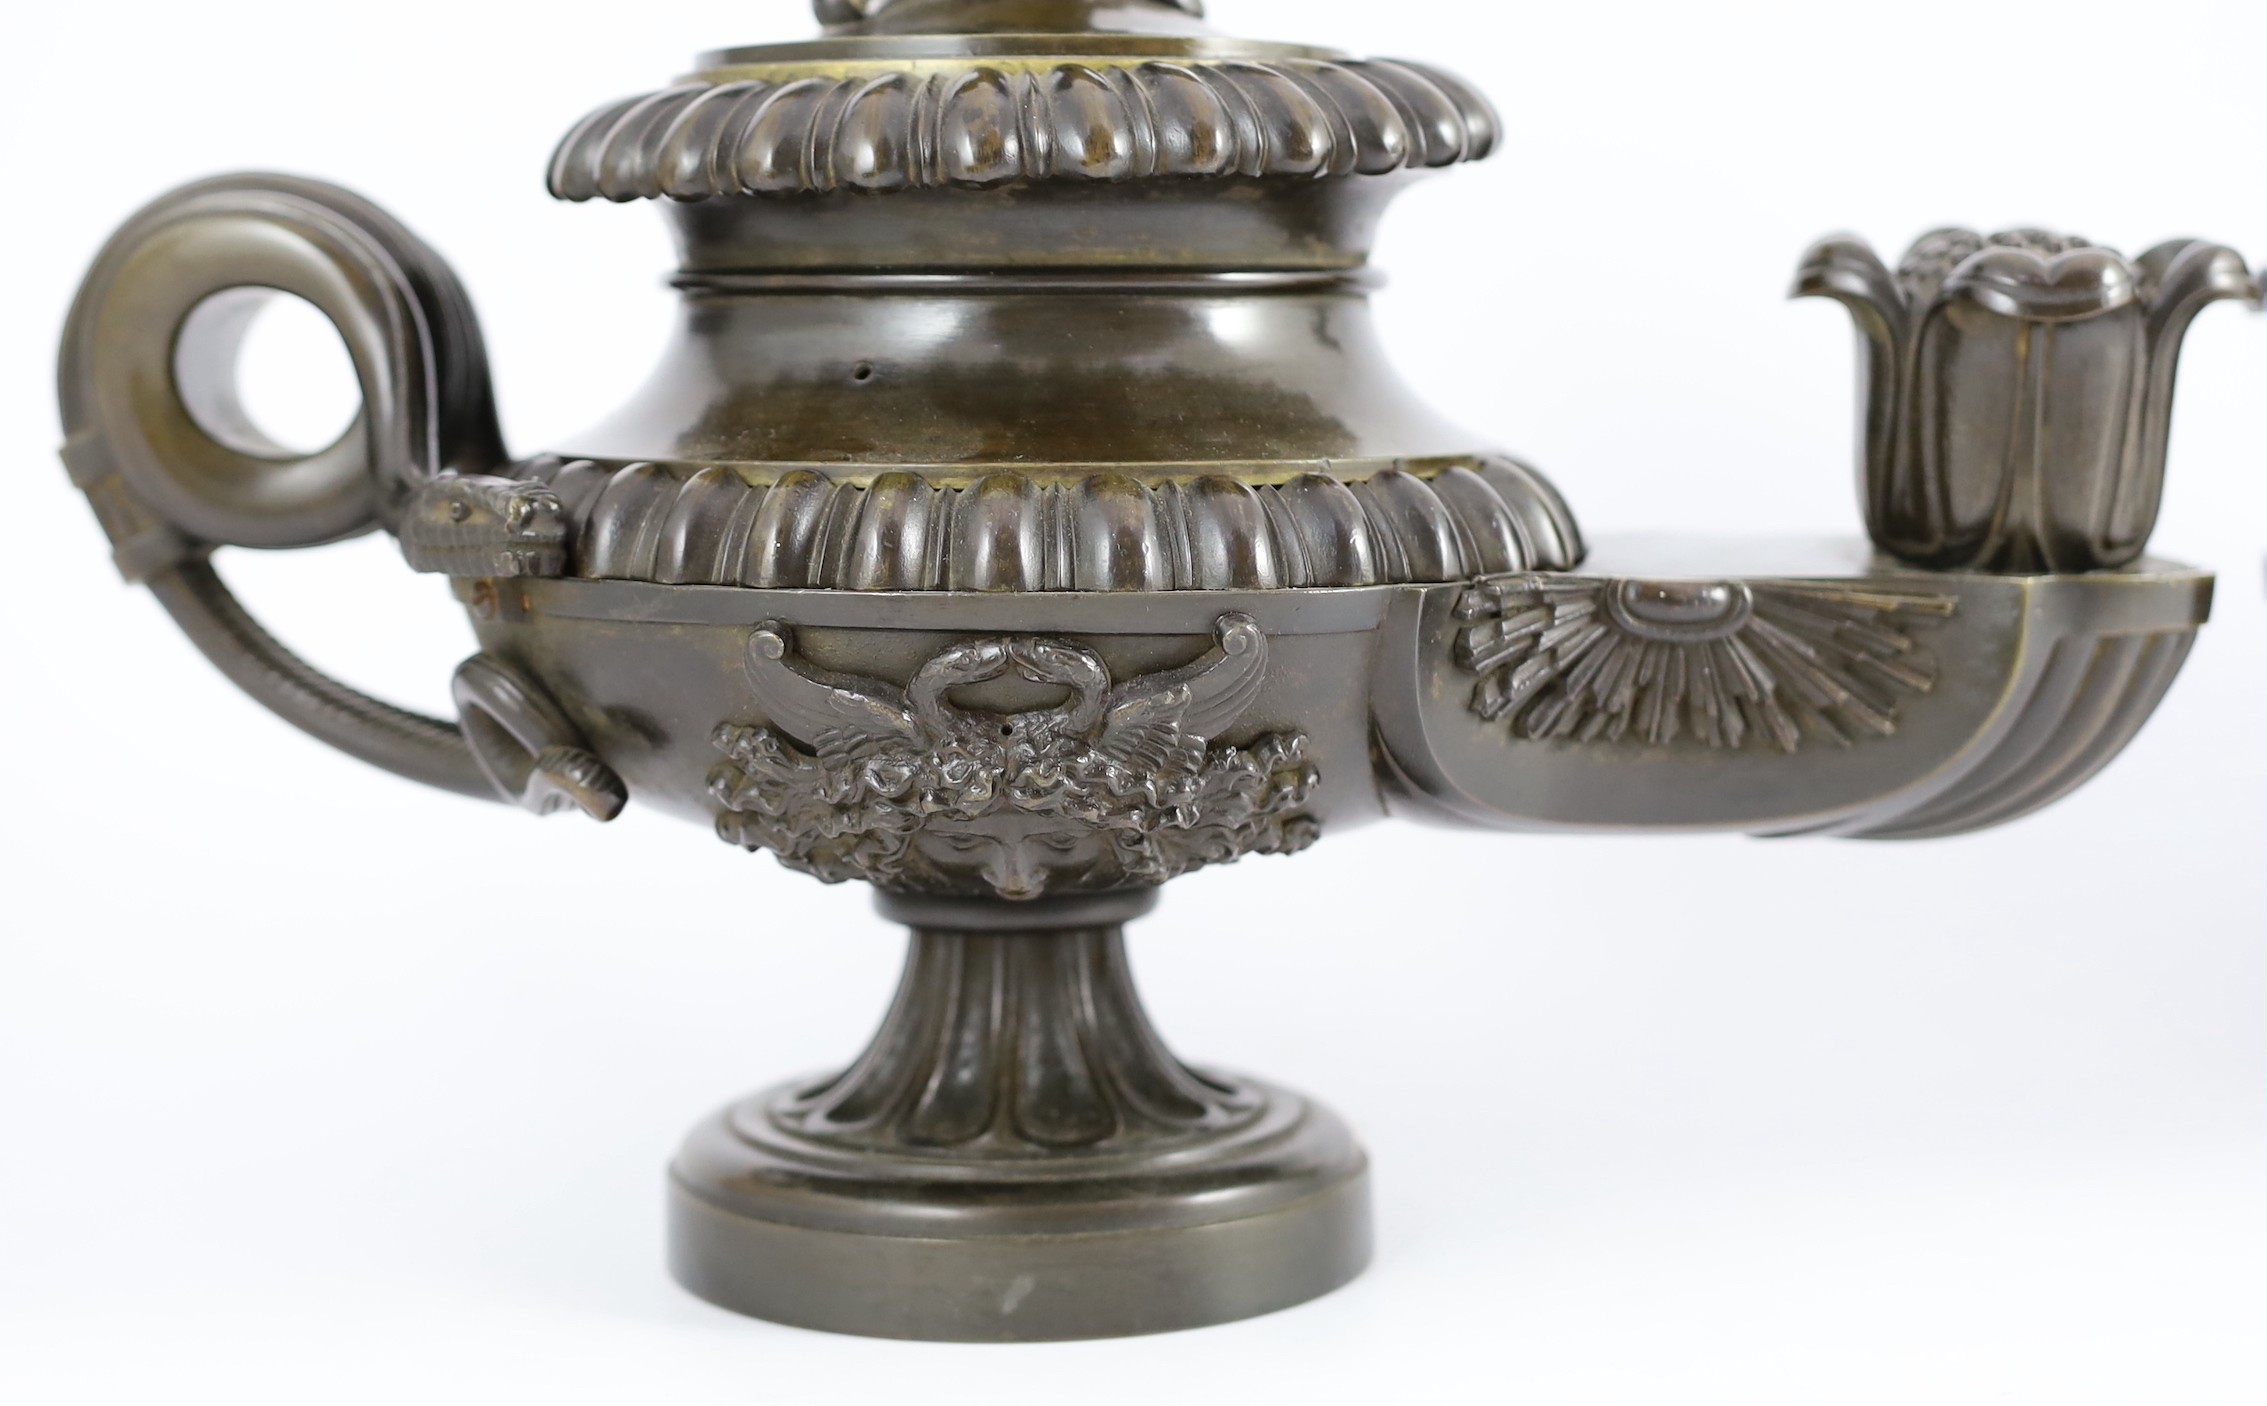 James De Ville, 367 Strand, London. A pair of Regency bronze oil lamps to a design by Thomas Hope, length 31cm depth 16cm height 25cm